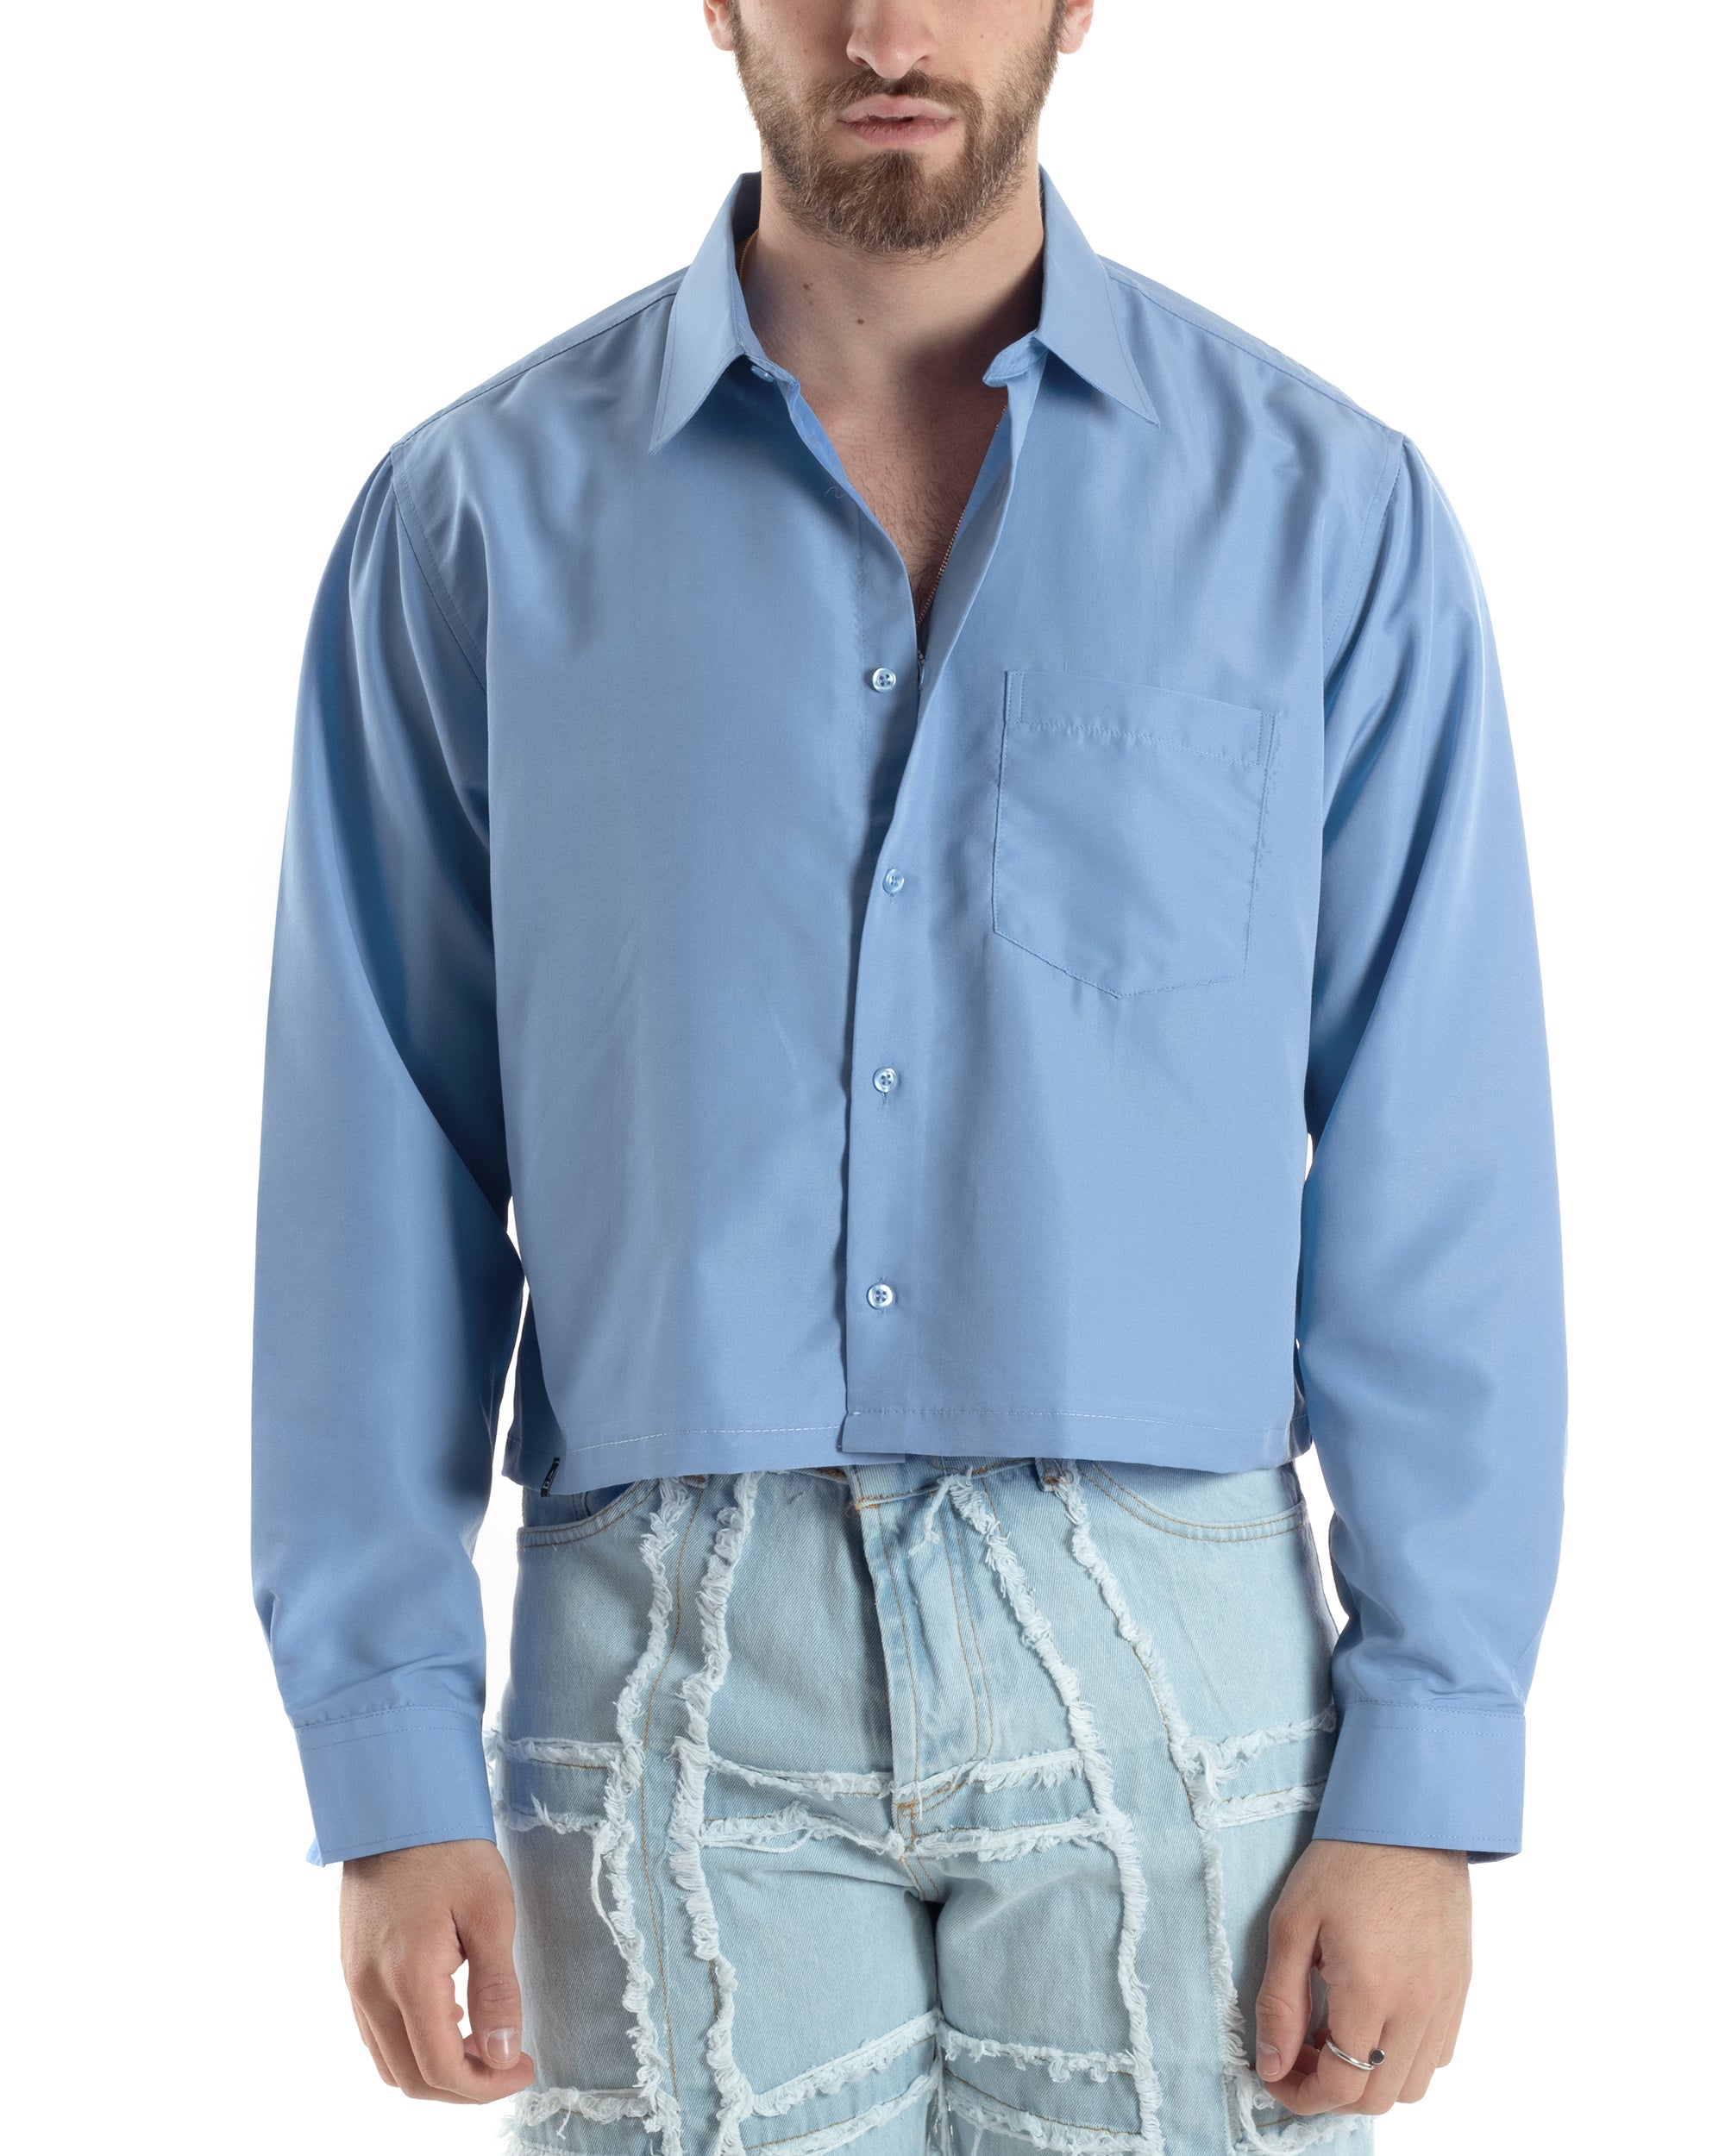 Camicia Uomo Cropped Manica Lunga Tinta Unita Polvere Boxy Fit Casual GIOSAL-C2828A